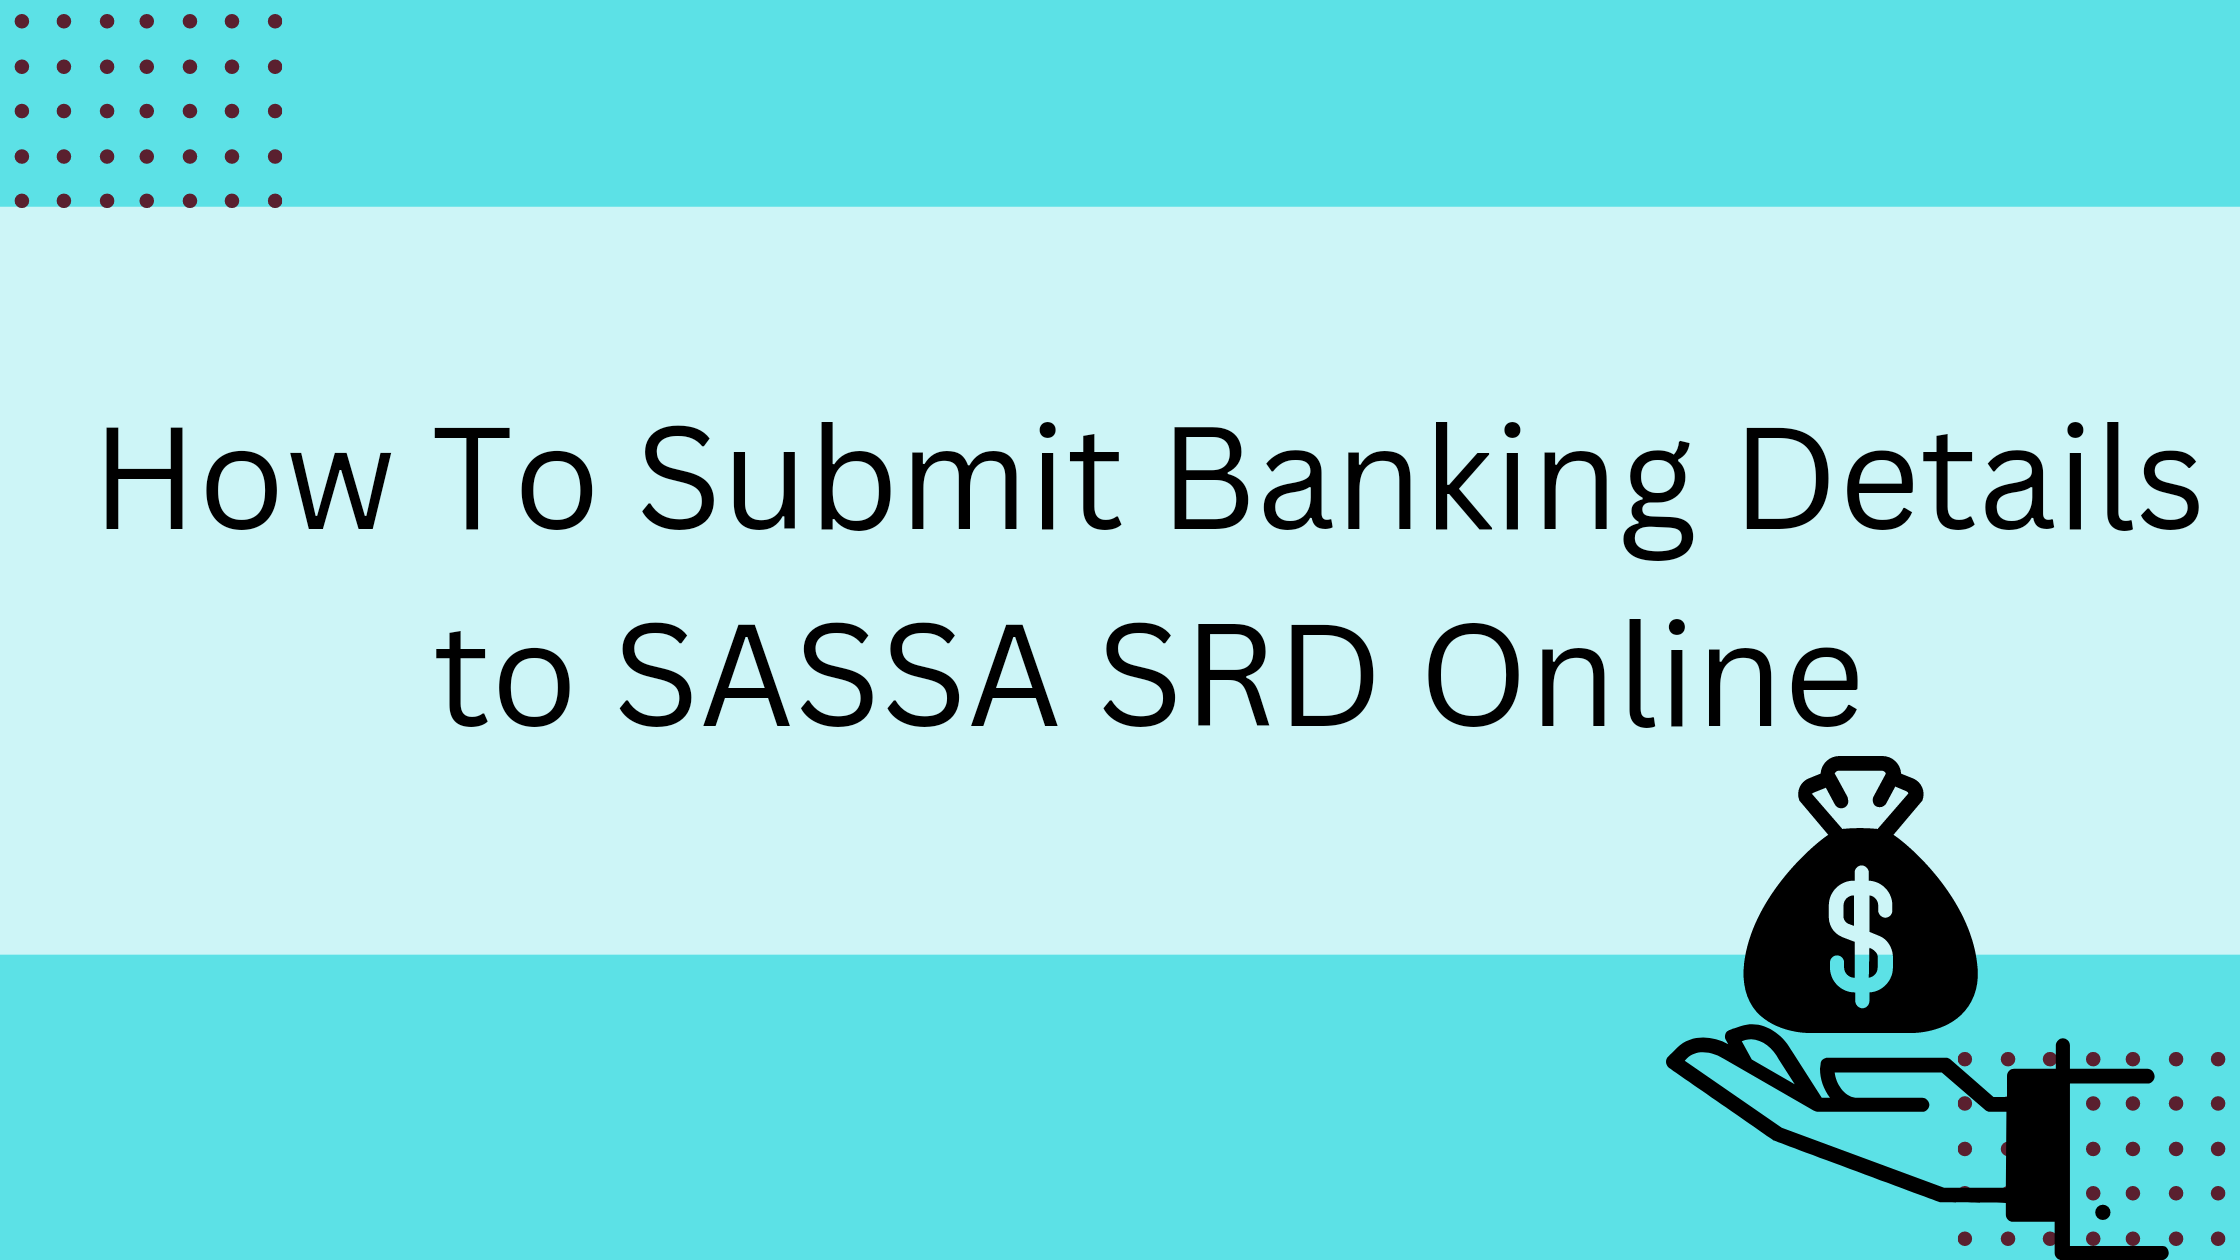 How To Submit Banking Details to SASSA SRD Online